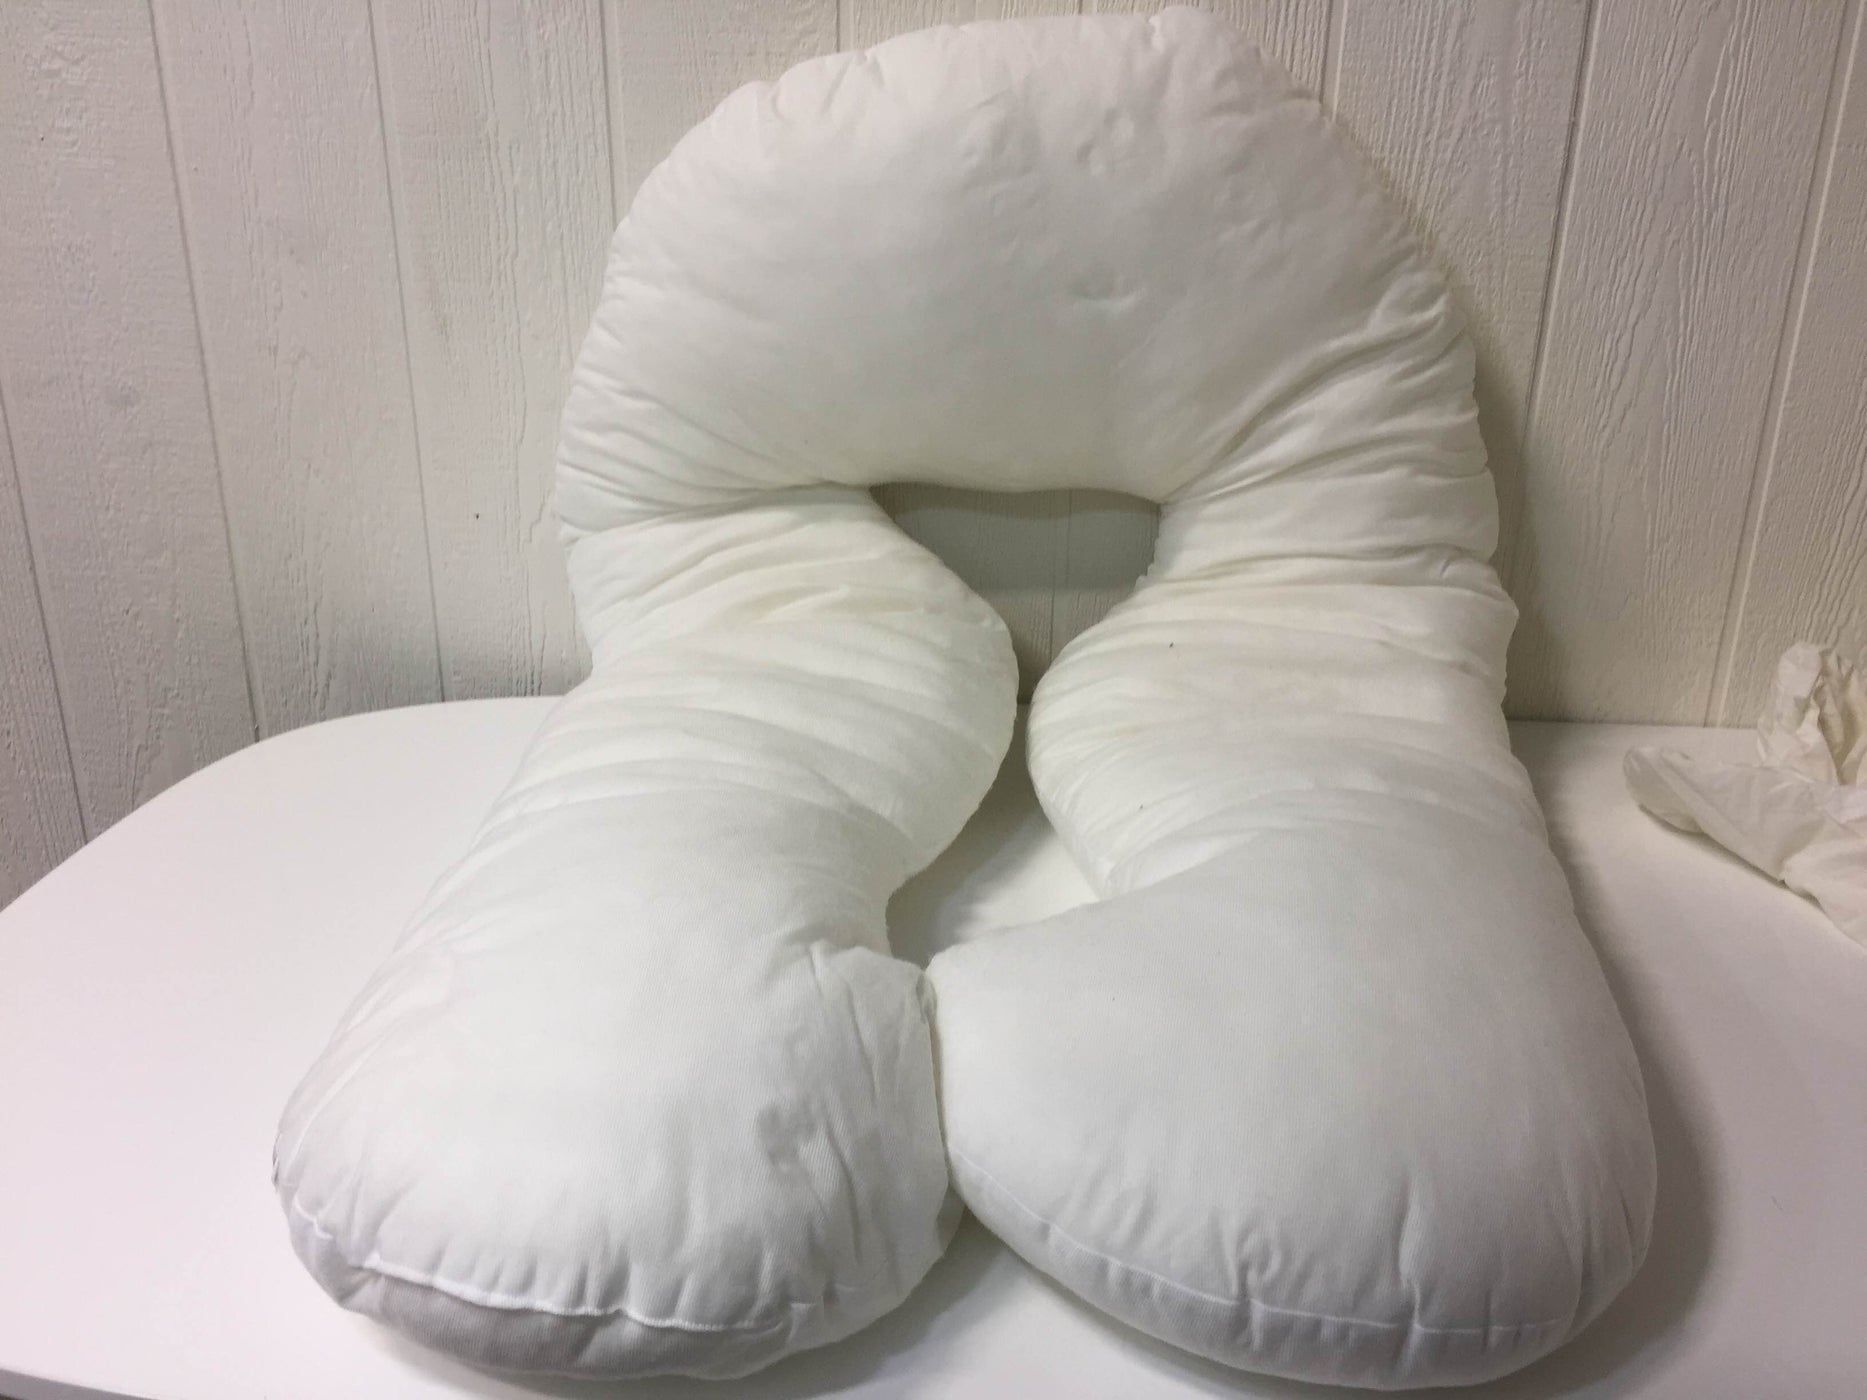 leachco pregnancy pillow canada